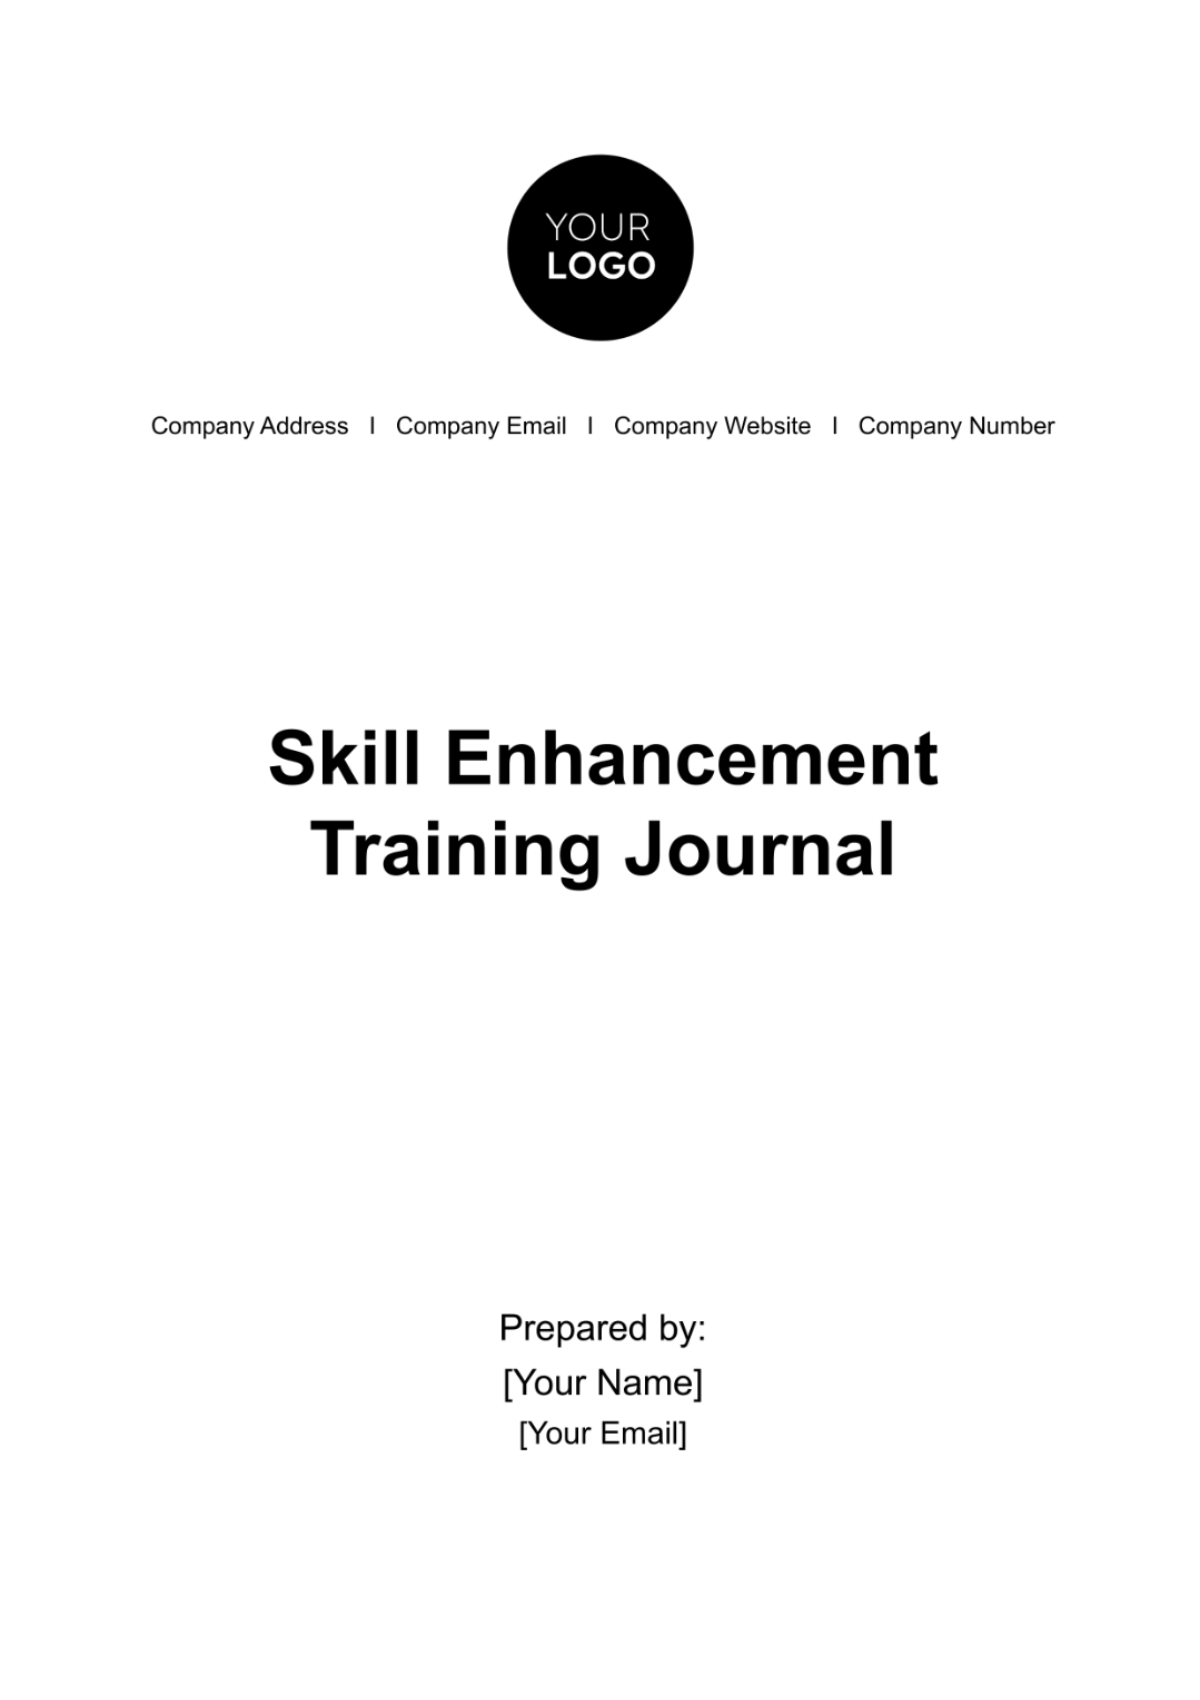 Free Skill Enhancement Training Journal HR Template